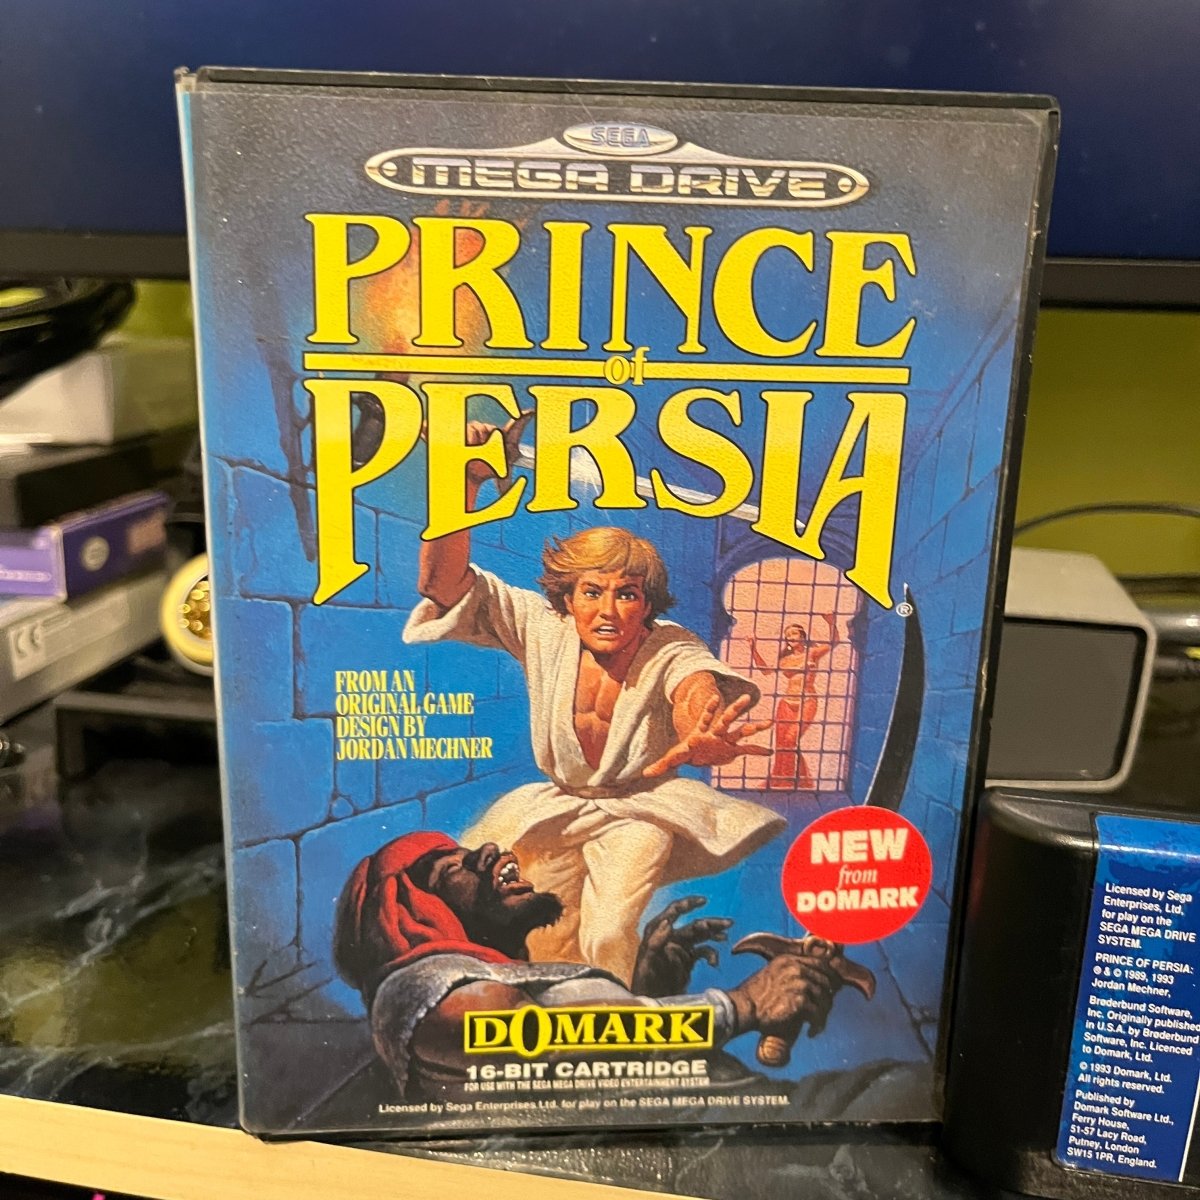 Buy Prince of Persia Sega megadrive -@ 8BitBeyond